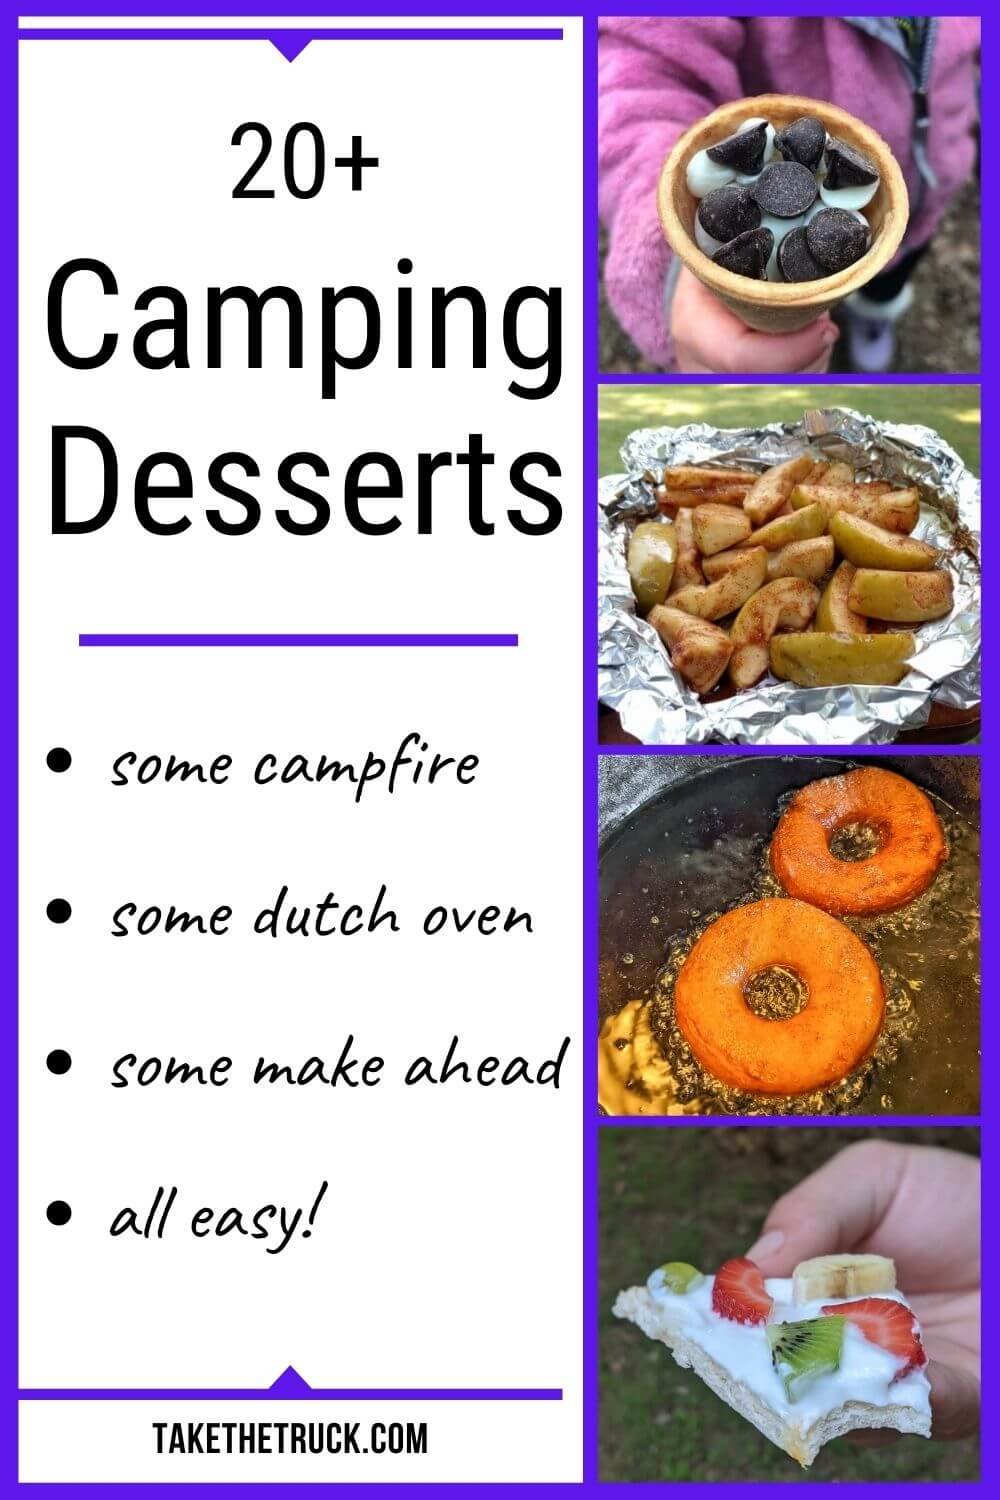 camping desserts make ahead | camping dessert recipes | camping dessert ideas | easy camping desserts | desserts for camping | dutch oven camping desserts | camping desserts campfire |  